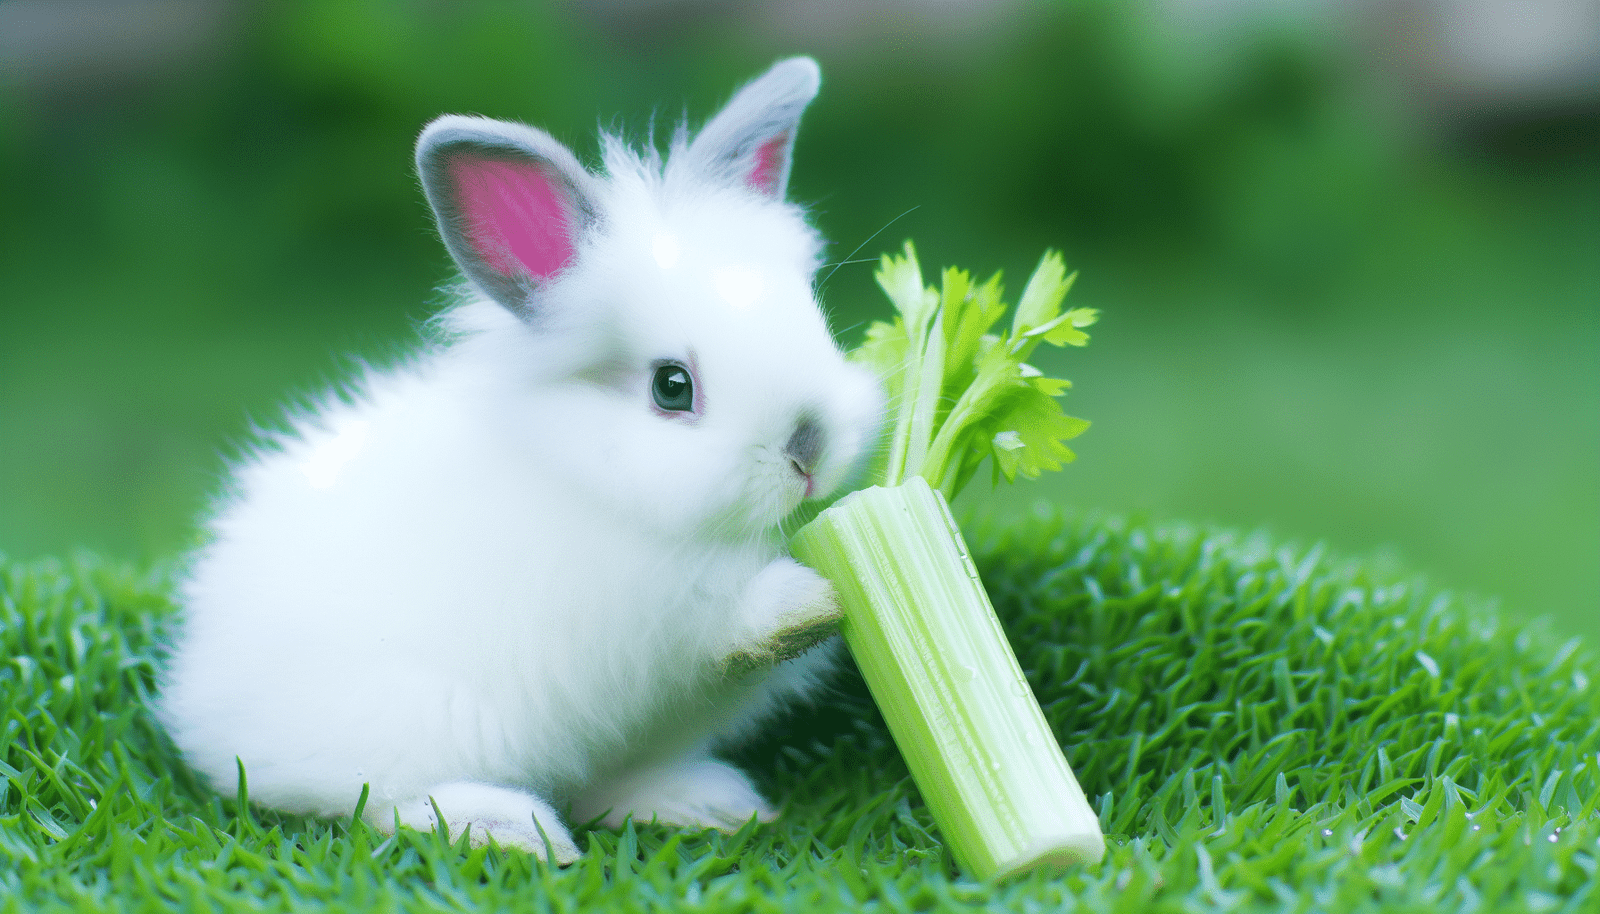 A cute bunny munching on a celery stick